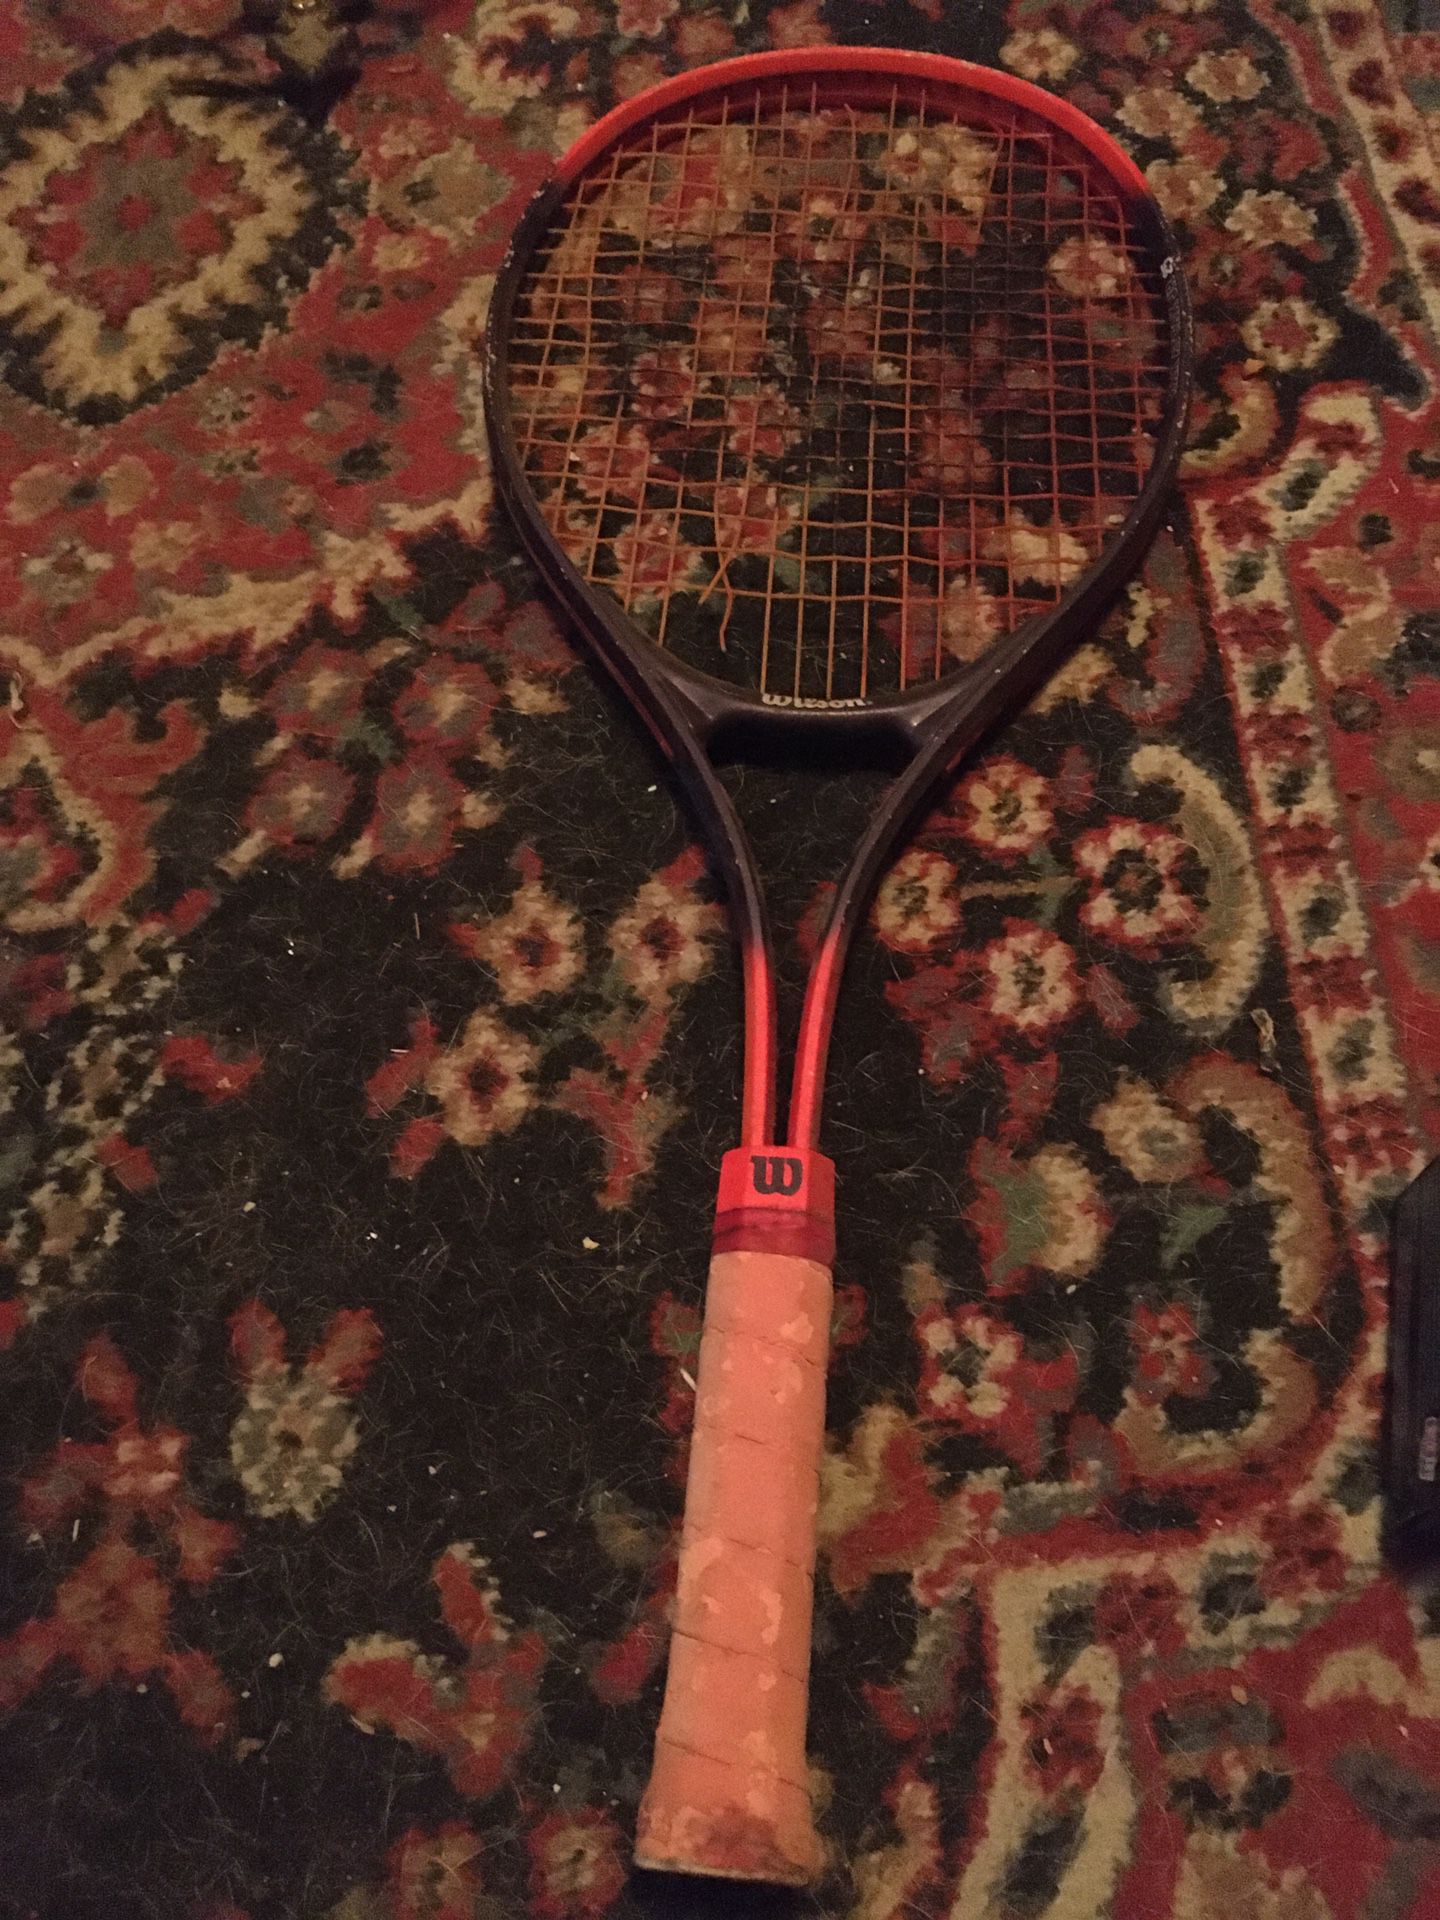 Tennis racket. Good condition